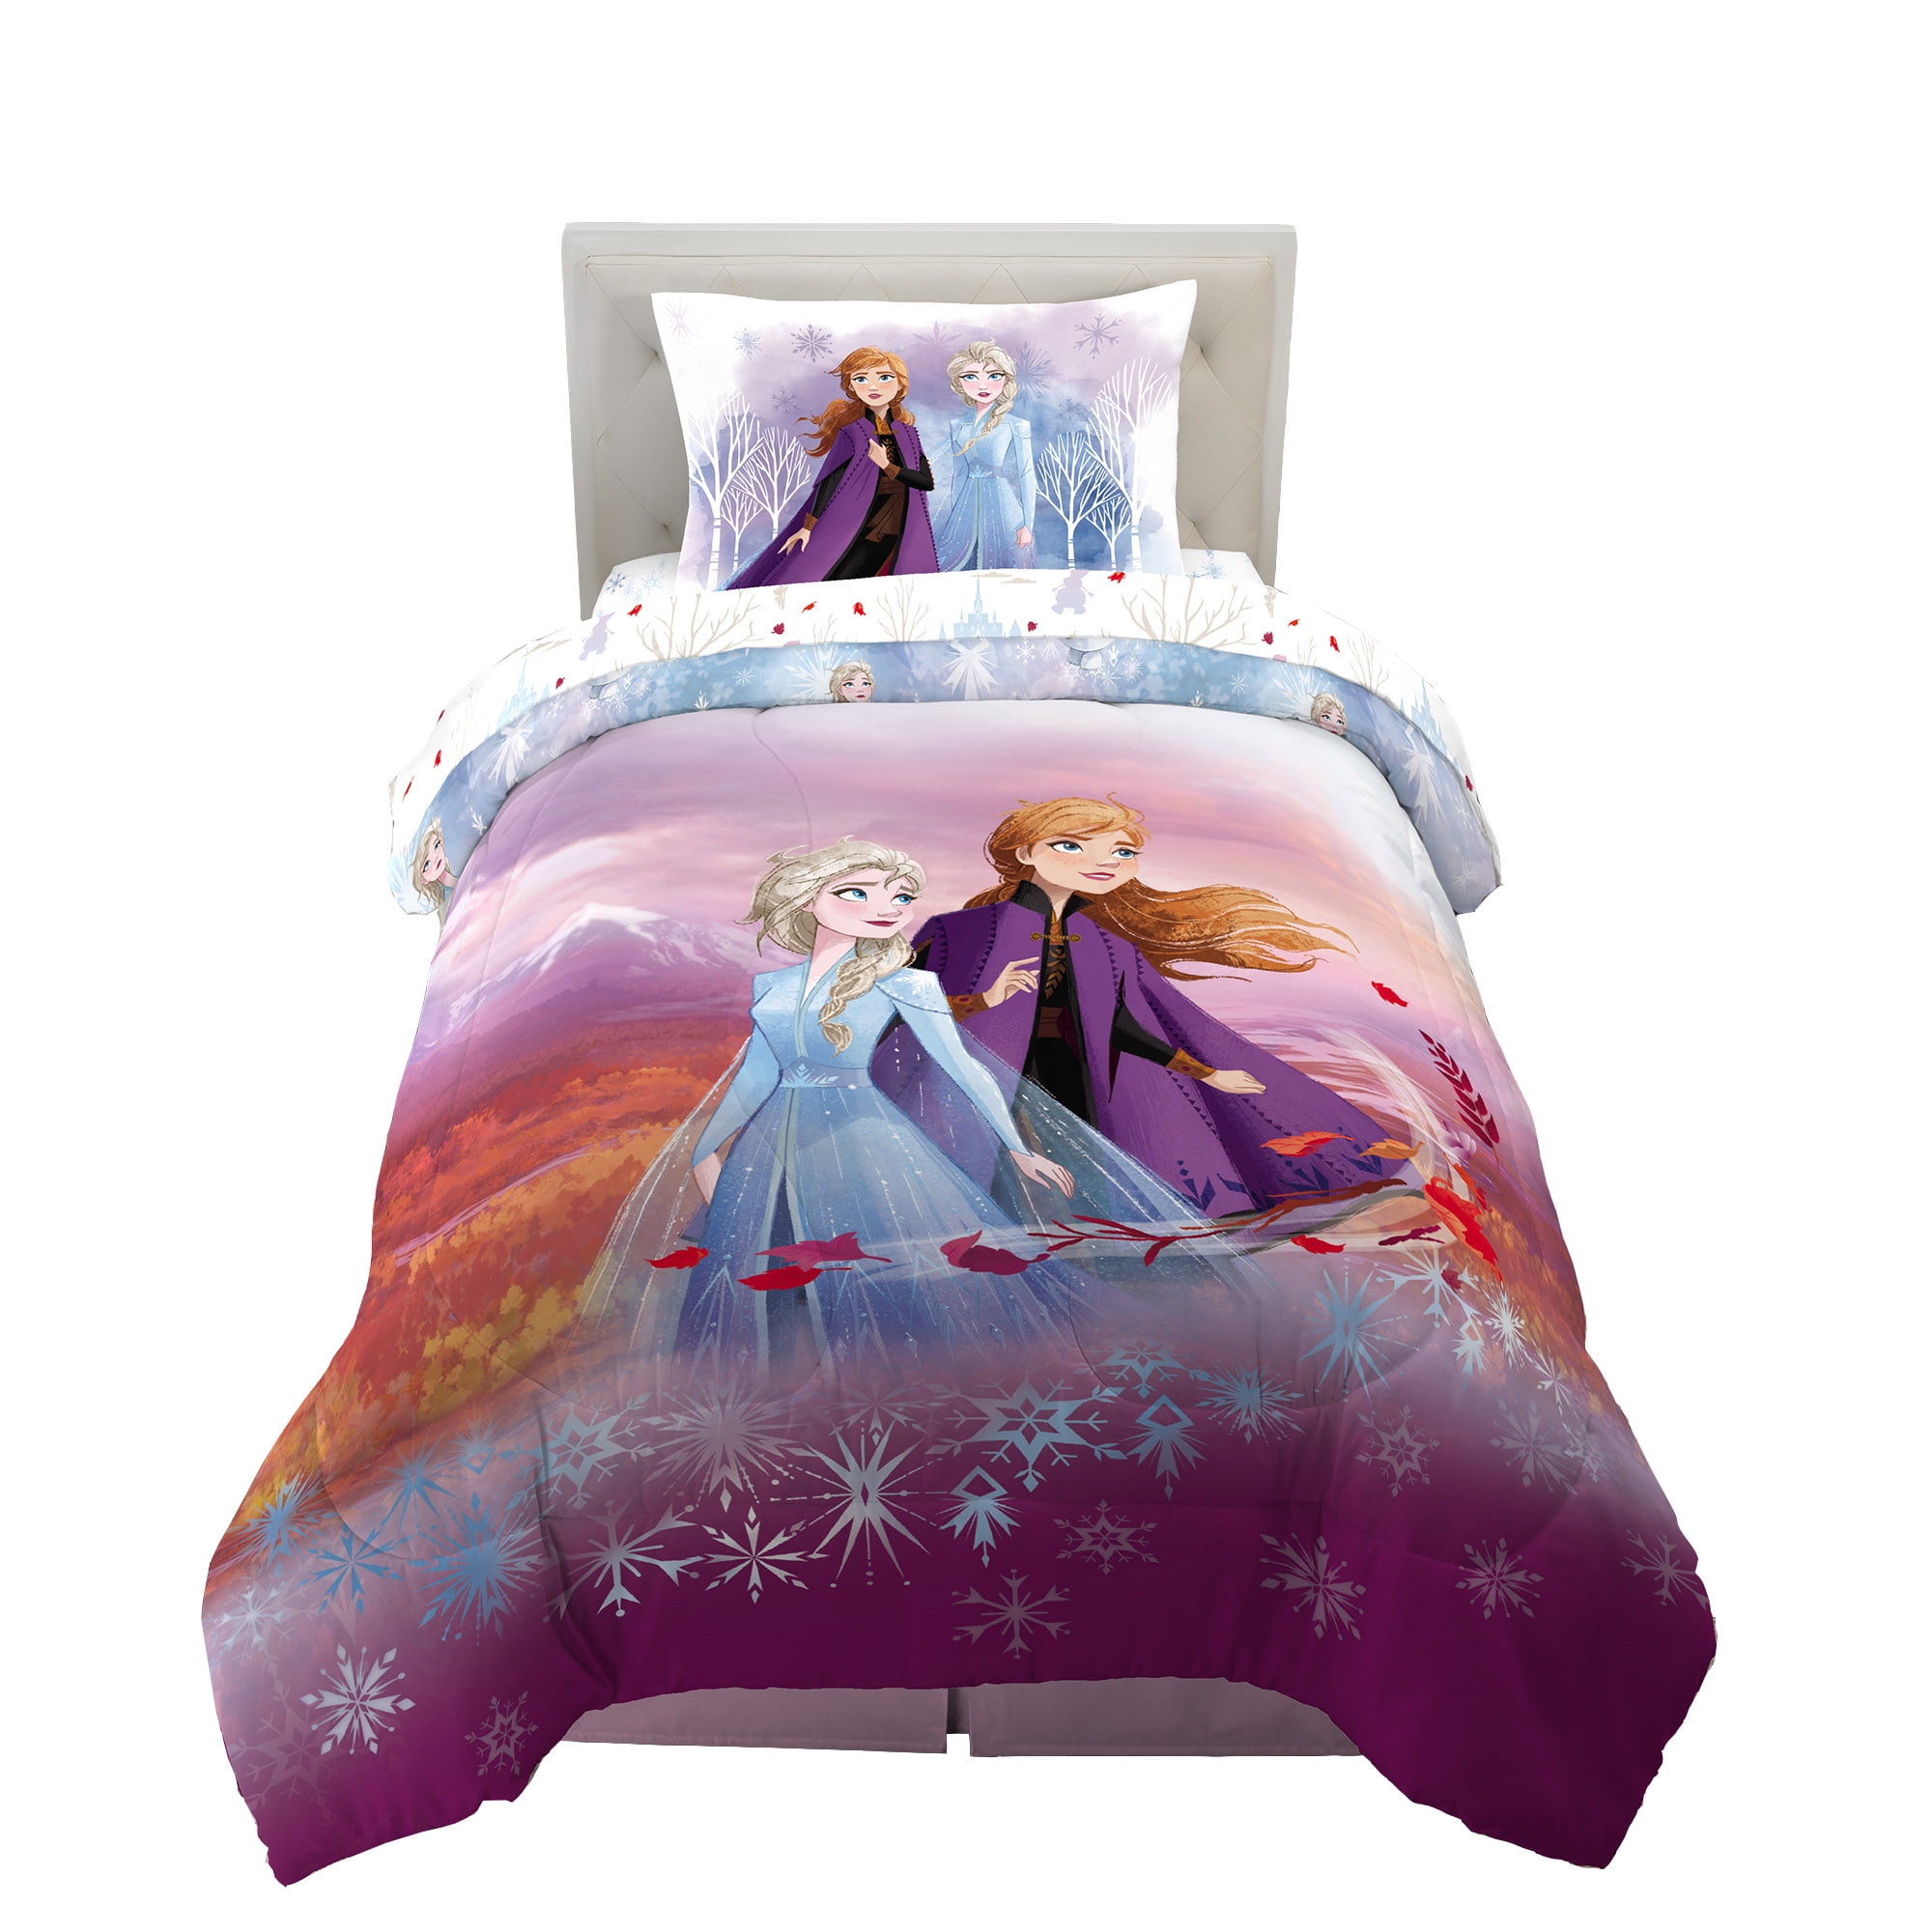 Details about   GENUINE Disney Store Exclusive Frozen Elsa & Anna Twin Comforter Bed Spread 